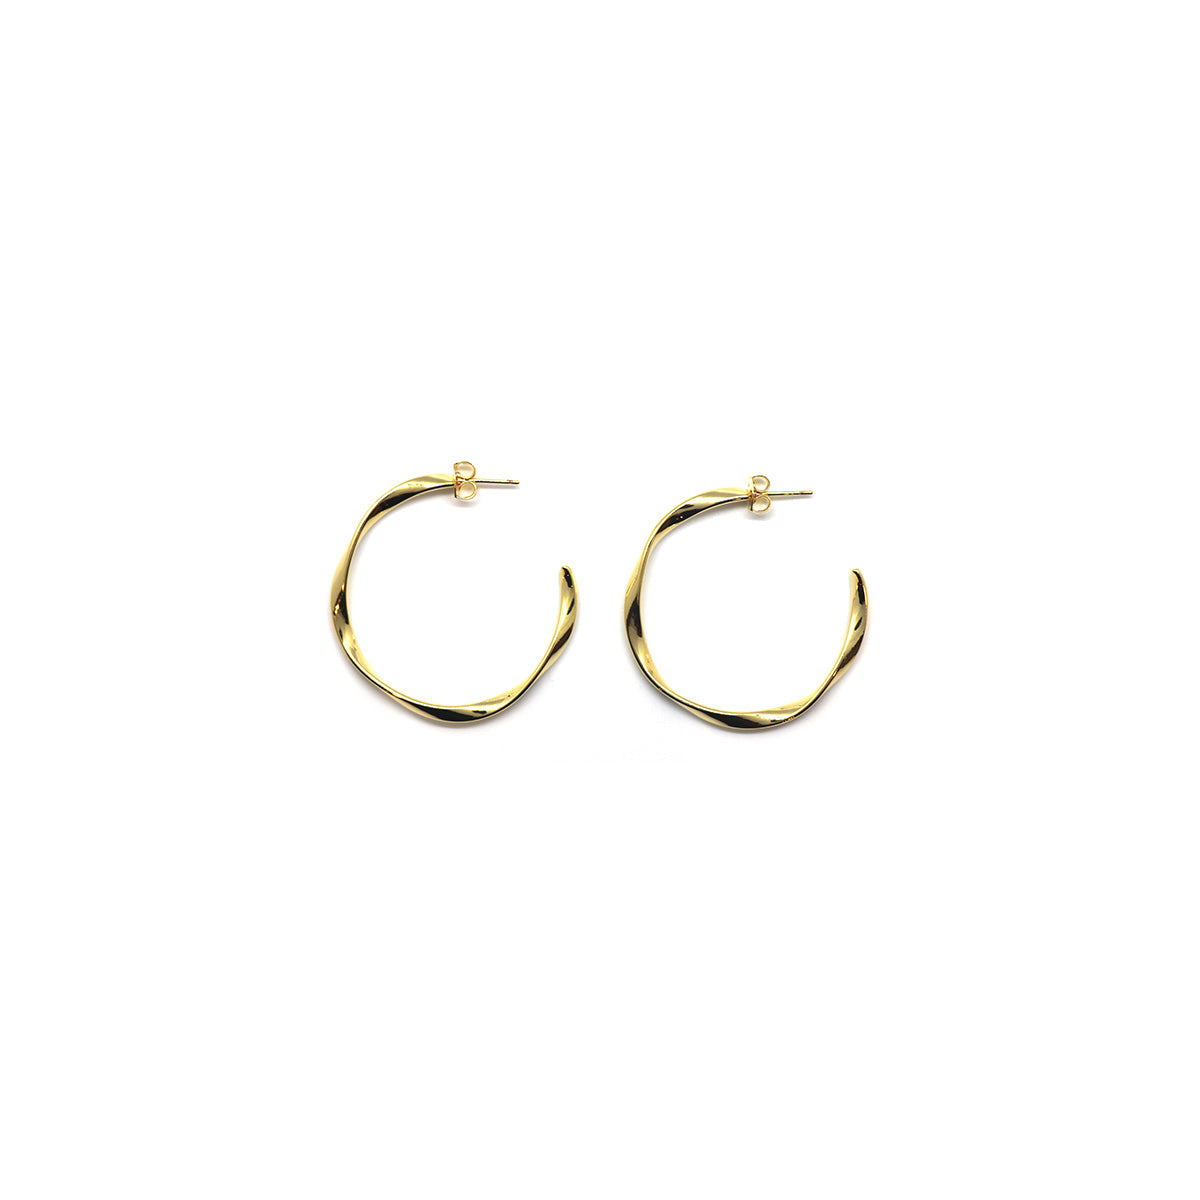 1" twisted half hoop gold earring